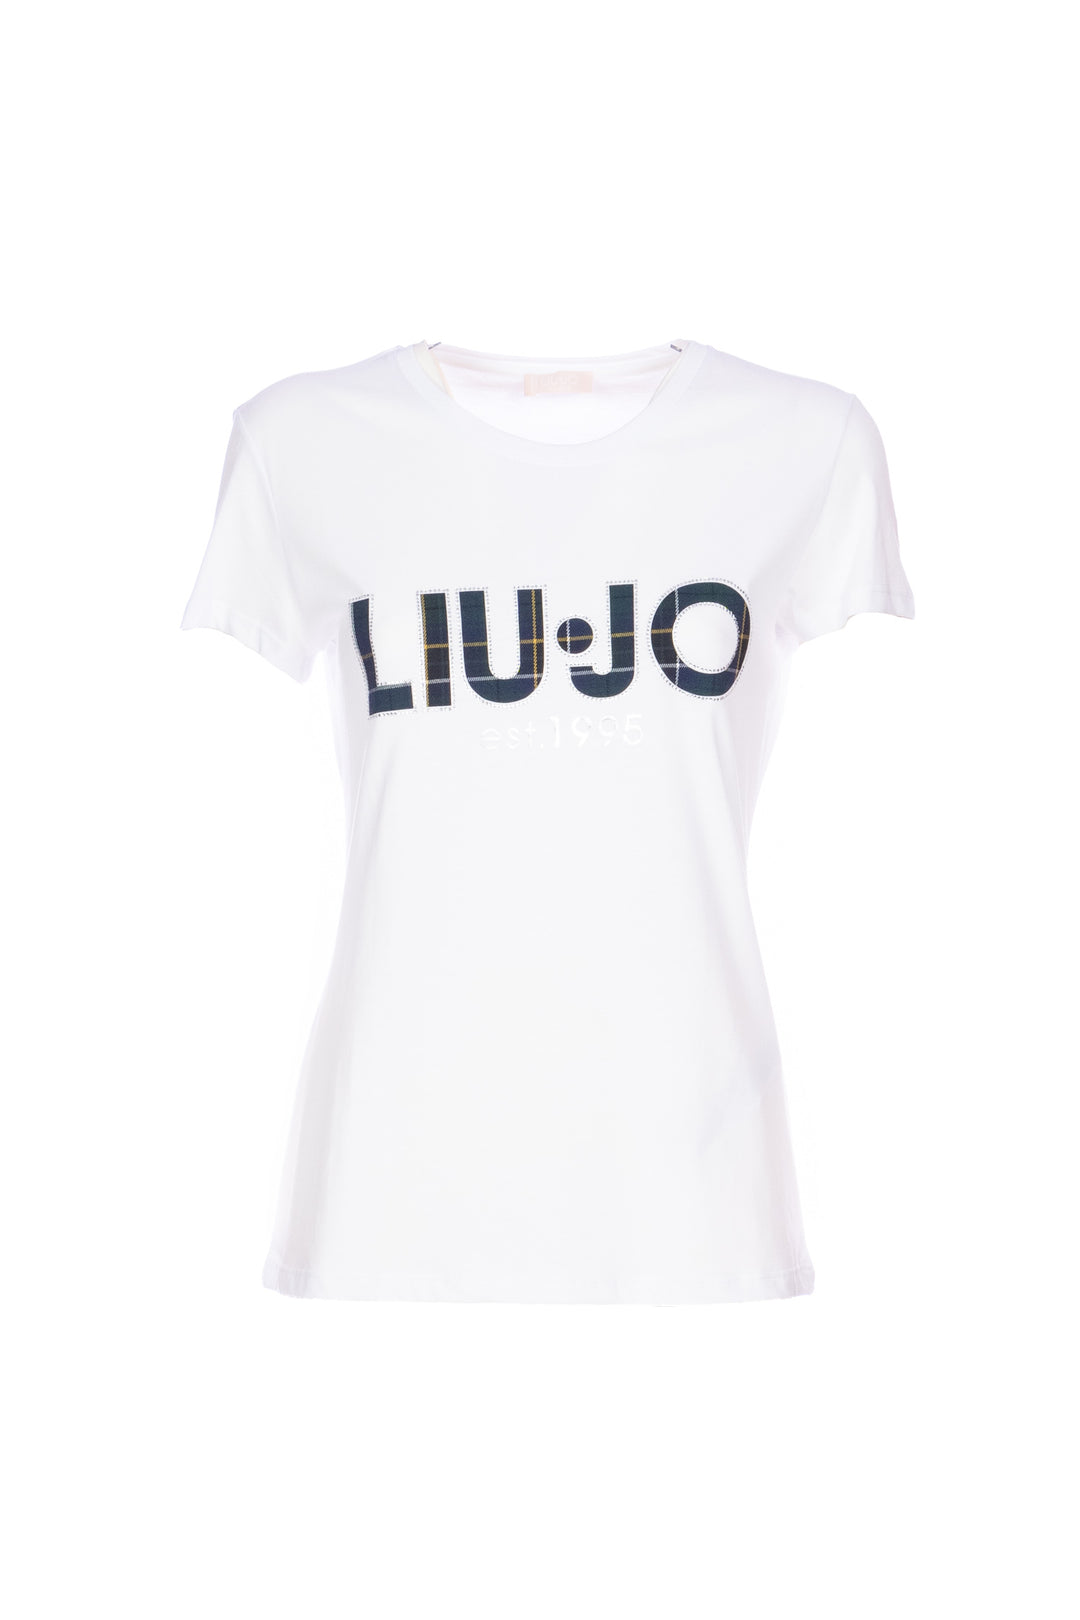 LIU JO T-shirt bianca in cotone con logo check - Mancinelli 1954